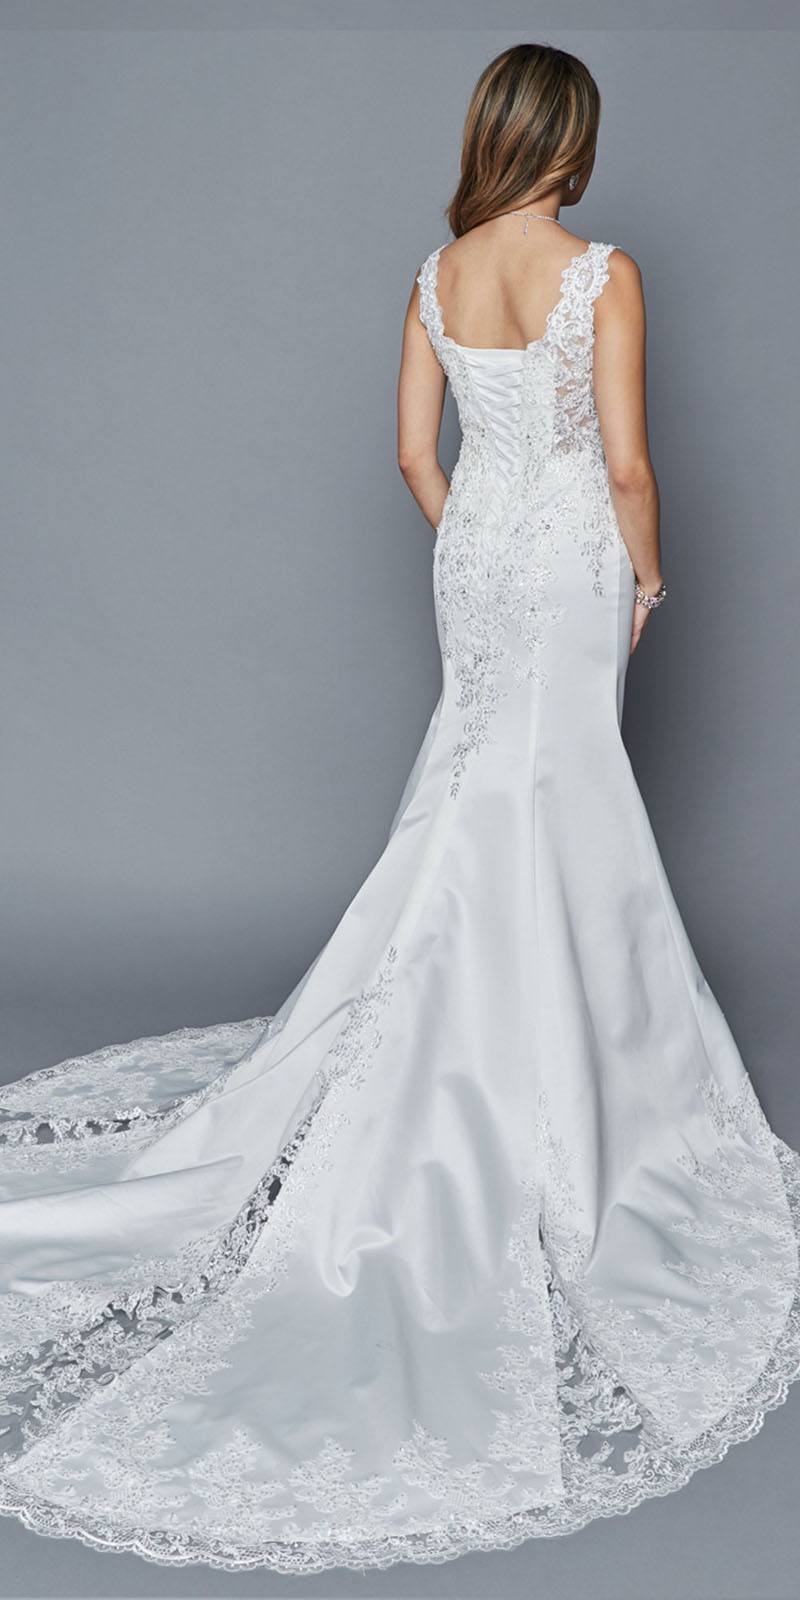 White V-Neck Mermaid Style Wedding Gown Sleeveless